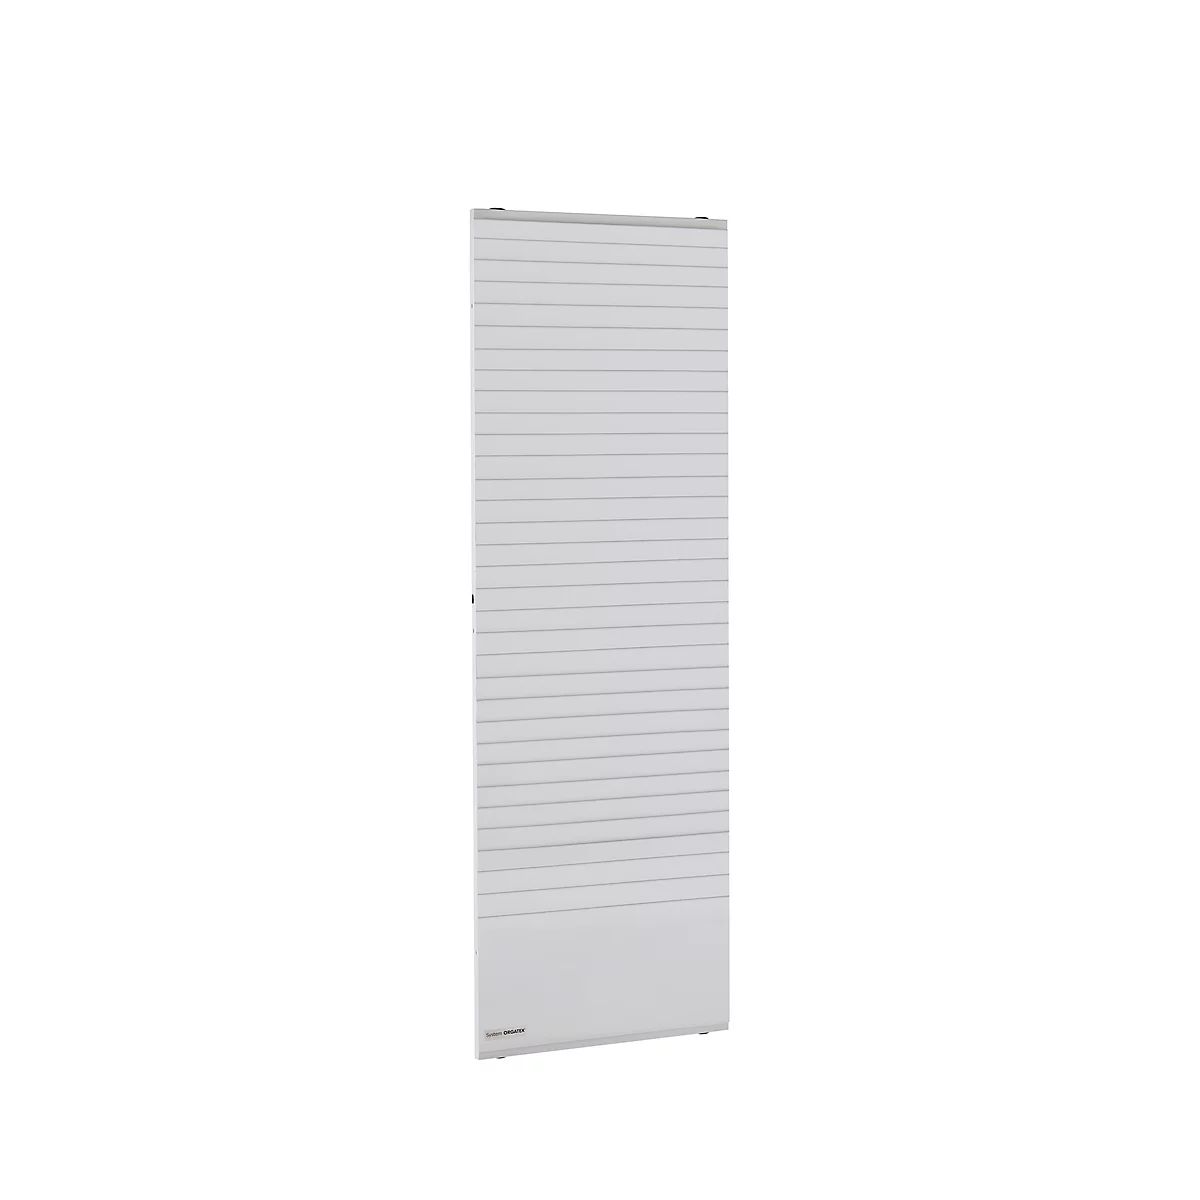 Cartón ORGATEX, formato DIN A5 horizontal/ formato A6 vertical, 795 x 250 mm